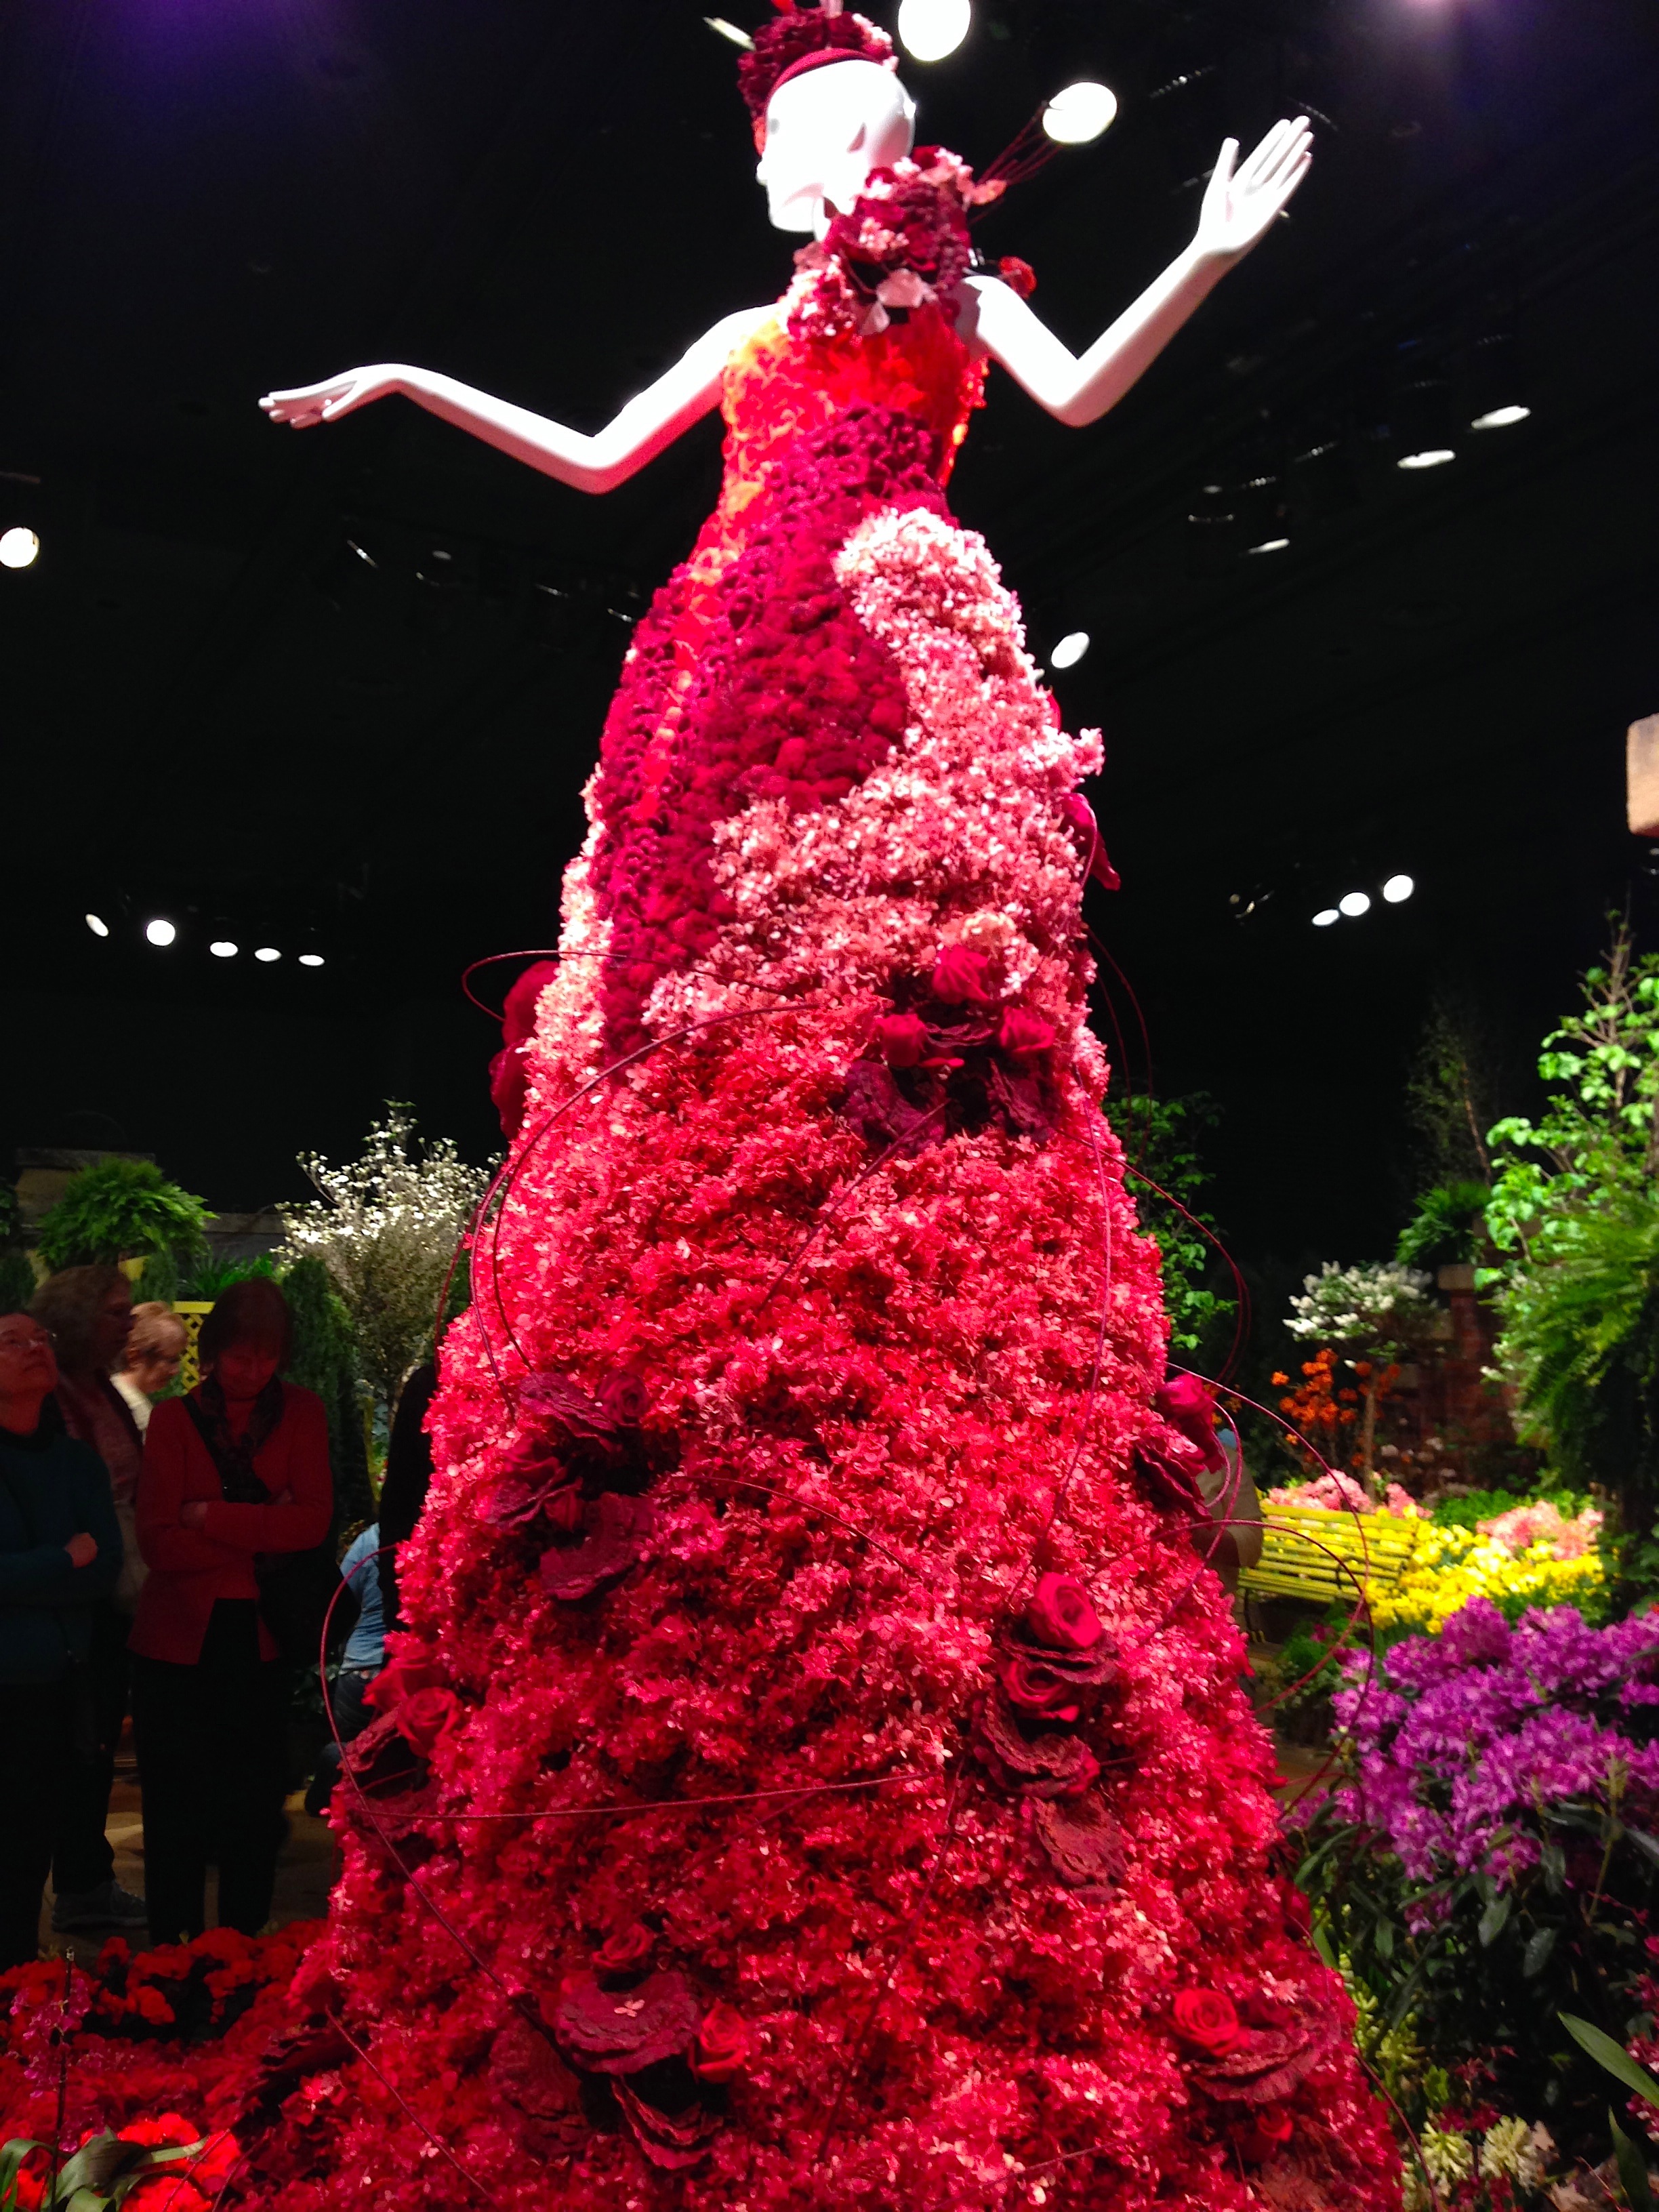 macy's - secret garden show - 2014 dress of flowers